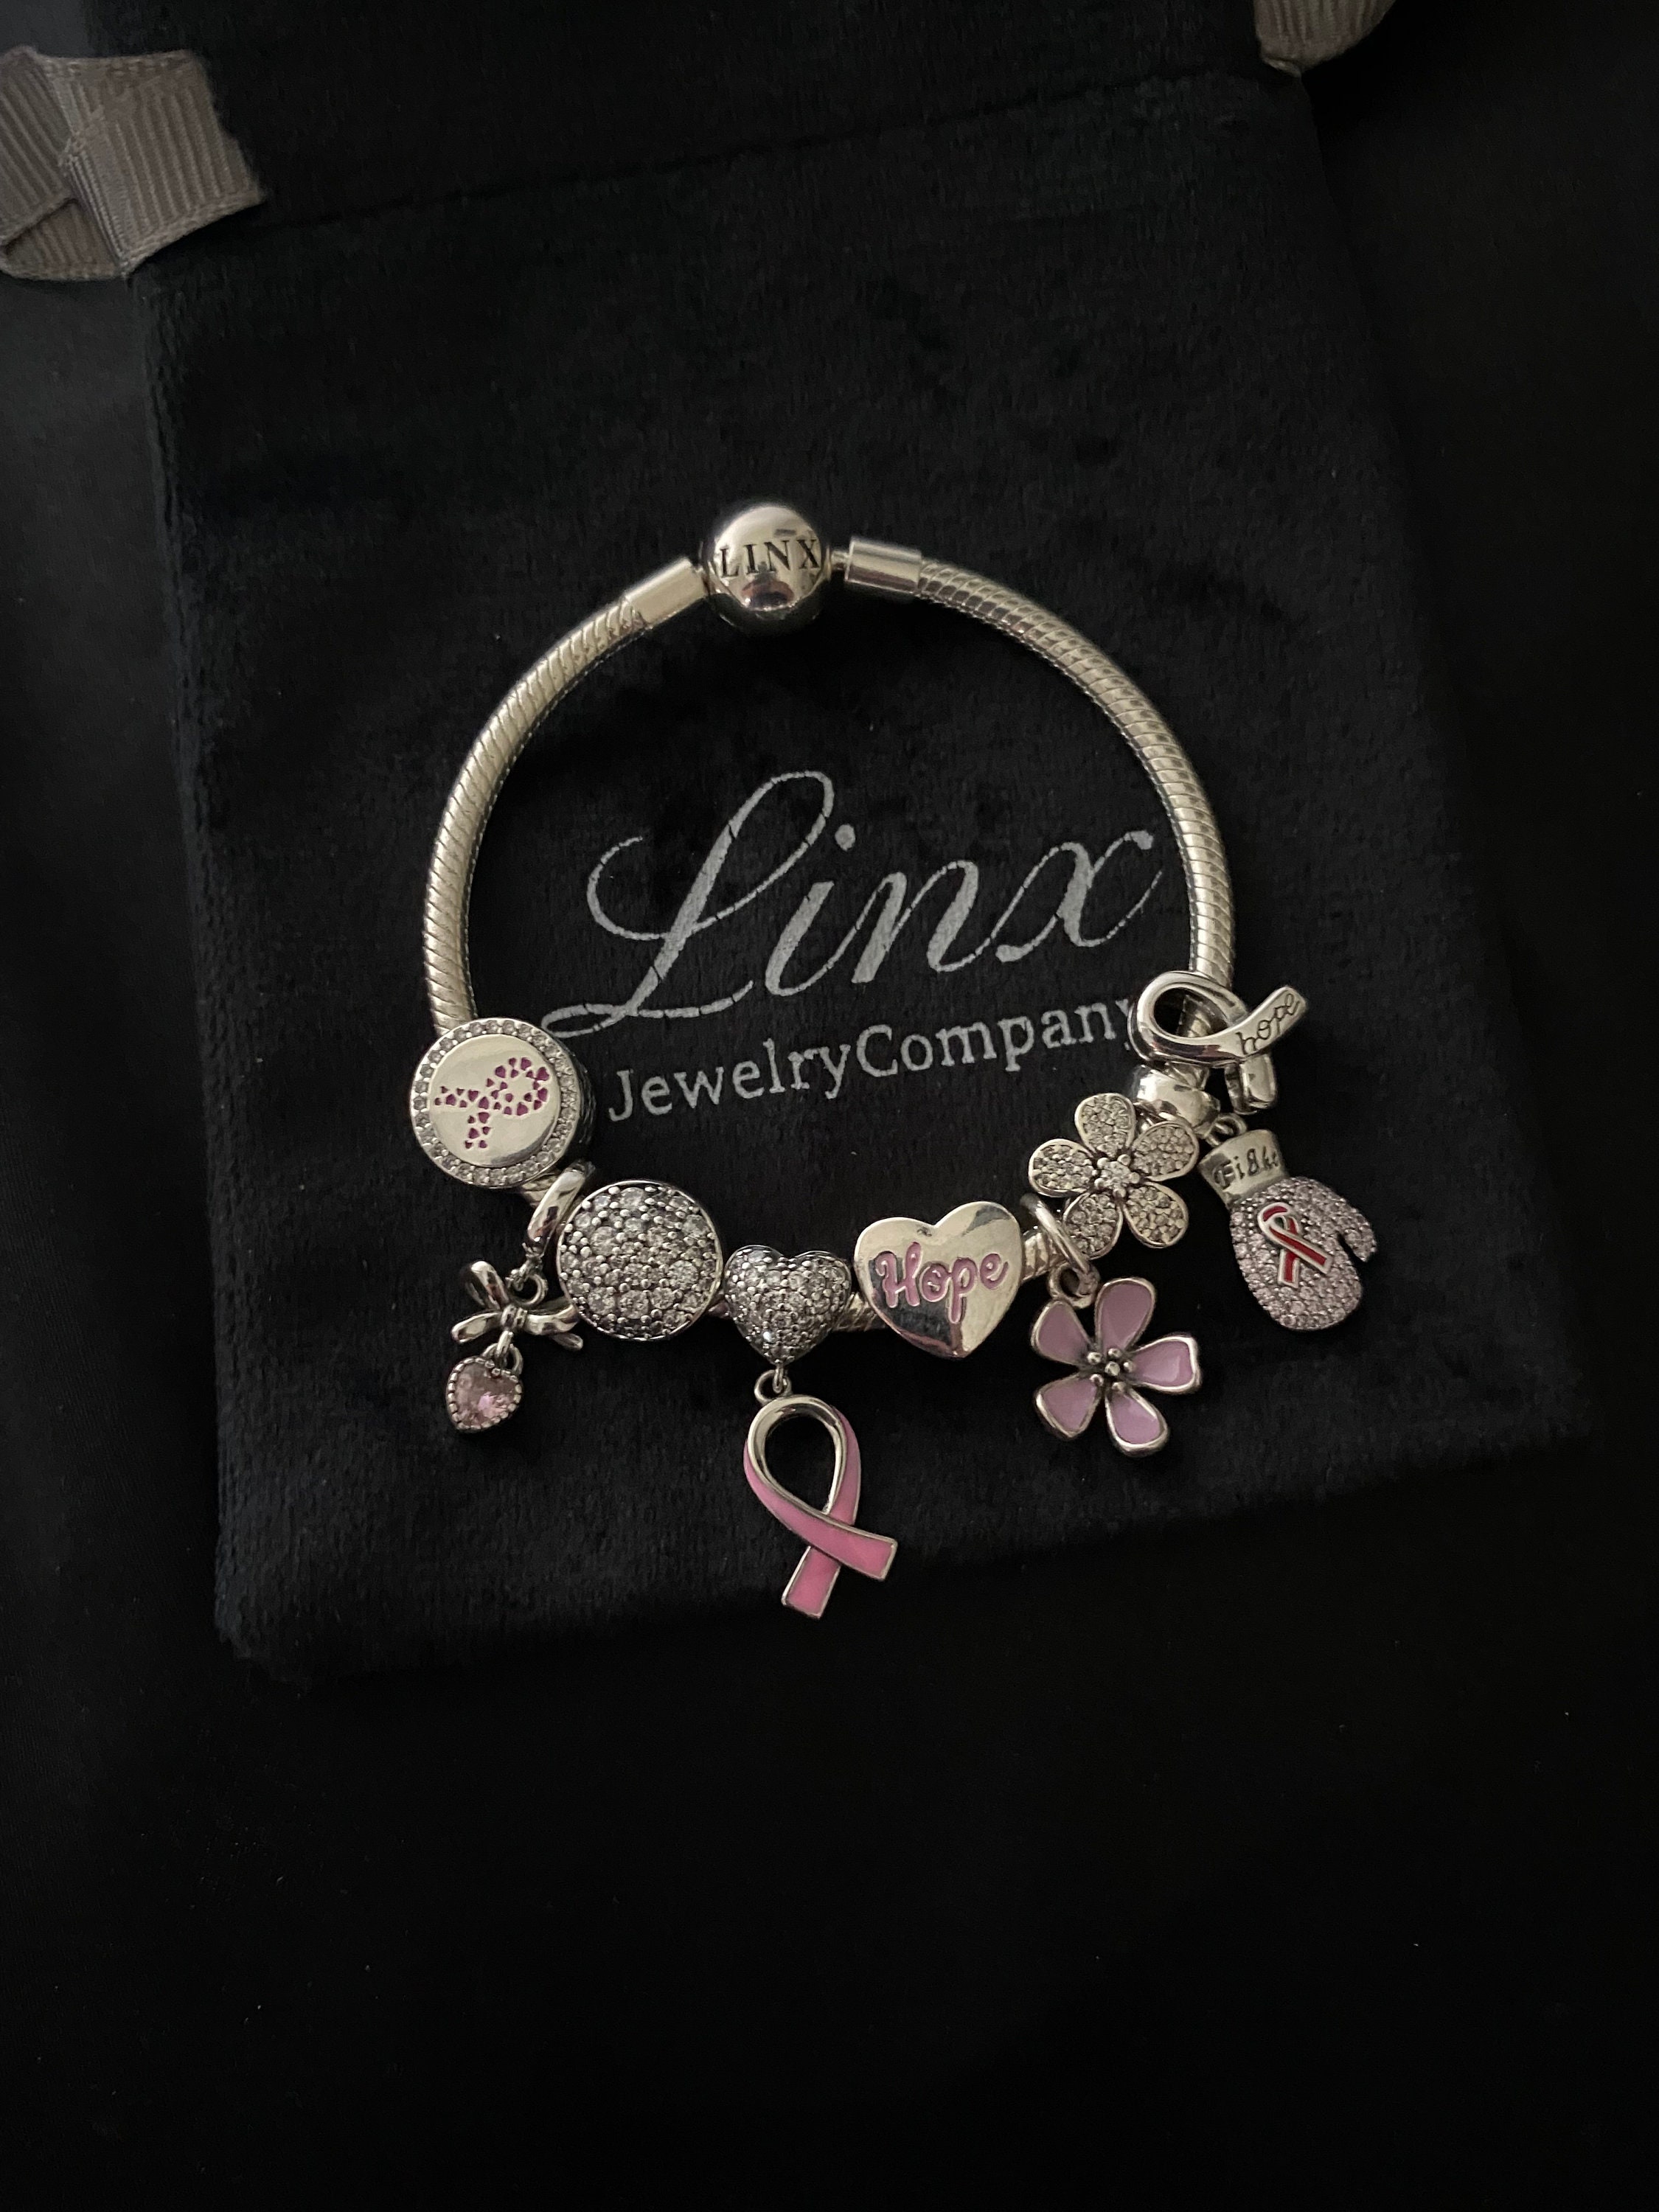 Linx, Jewelry